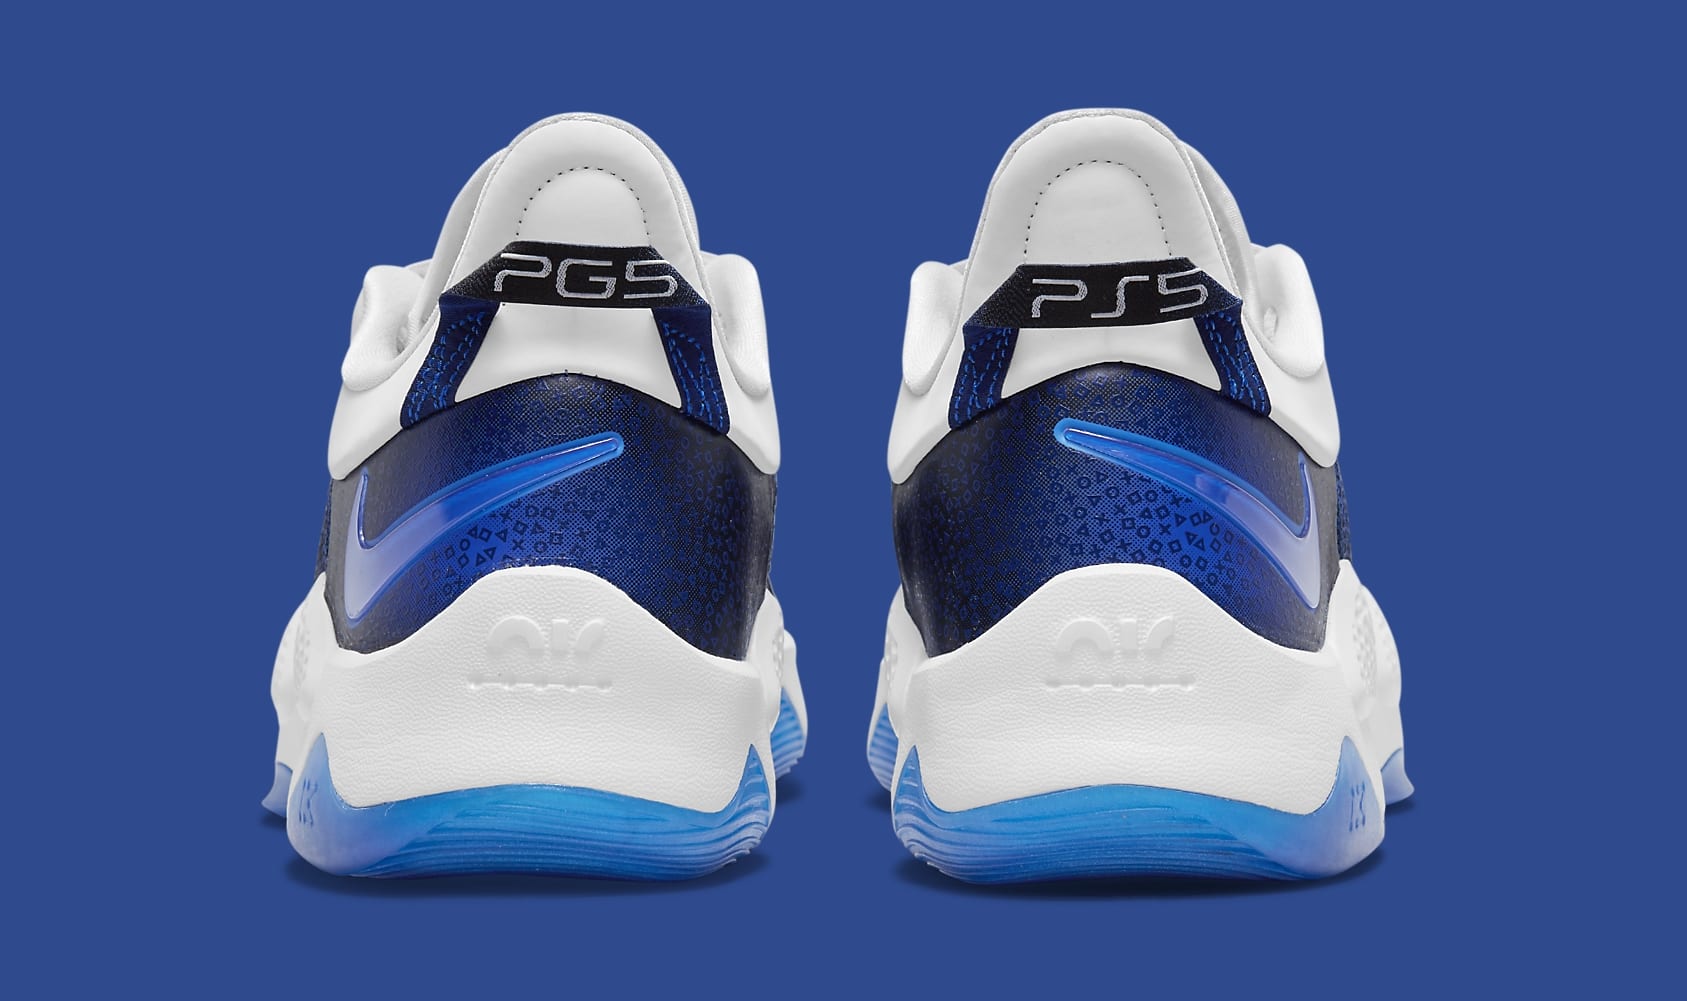 Playstation x Nike PG 5 'PS5' Blue CW3144-400 Heel